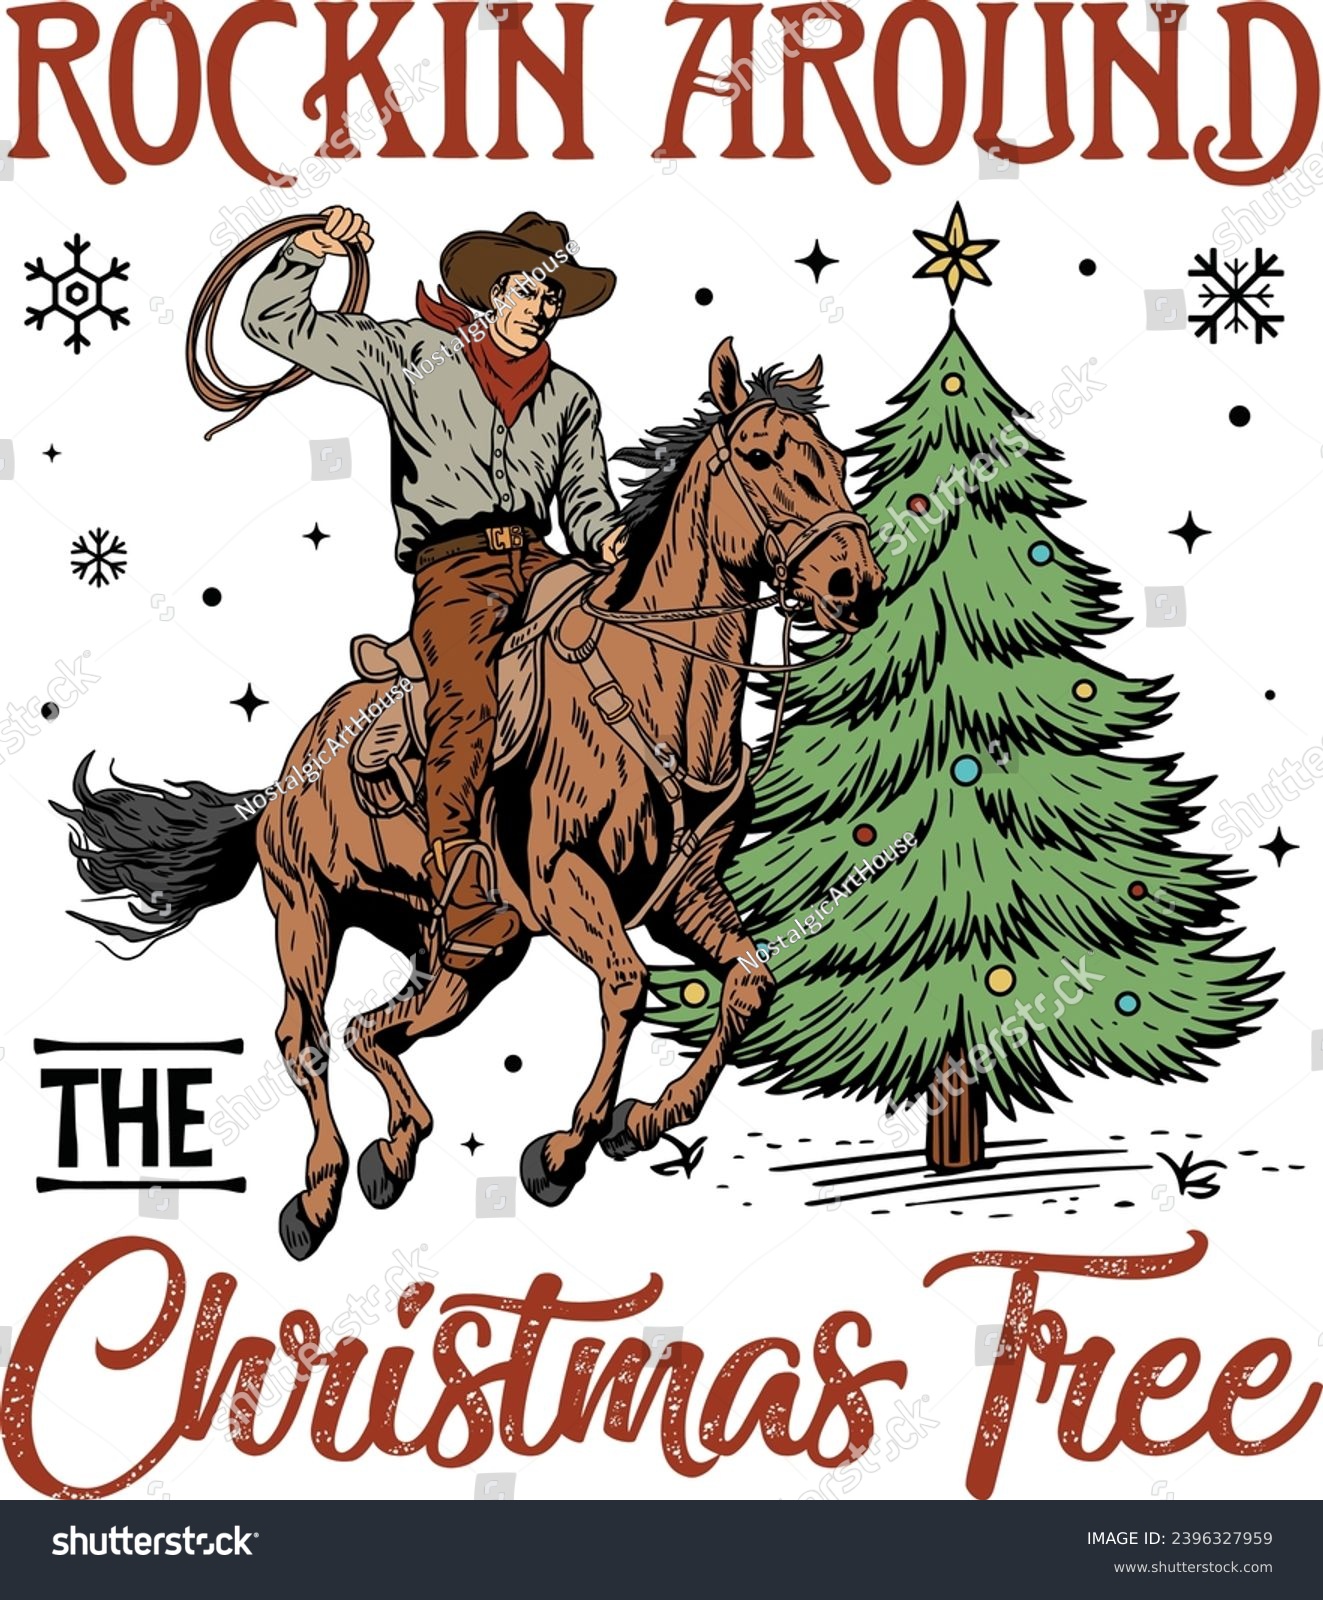 SVG of Rockin Around The Christmas Tree, Western Christmas, Cowboy Christmas, Country Christmas, Cowboy Rodeo svg